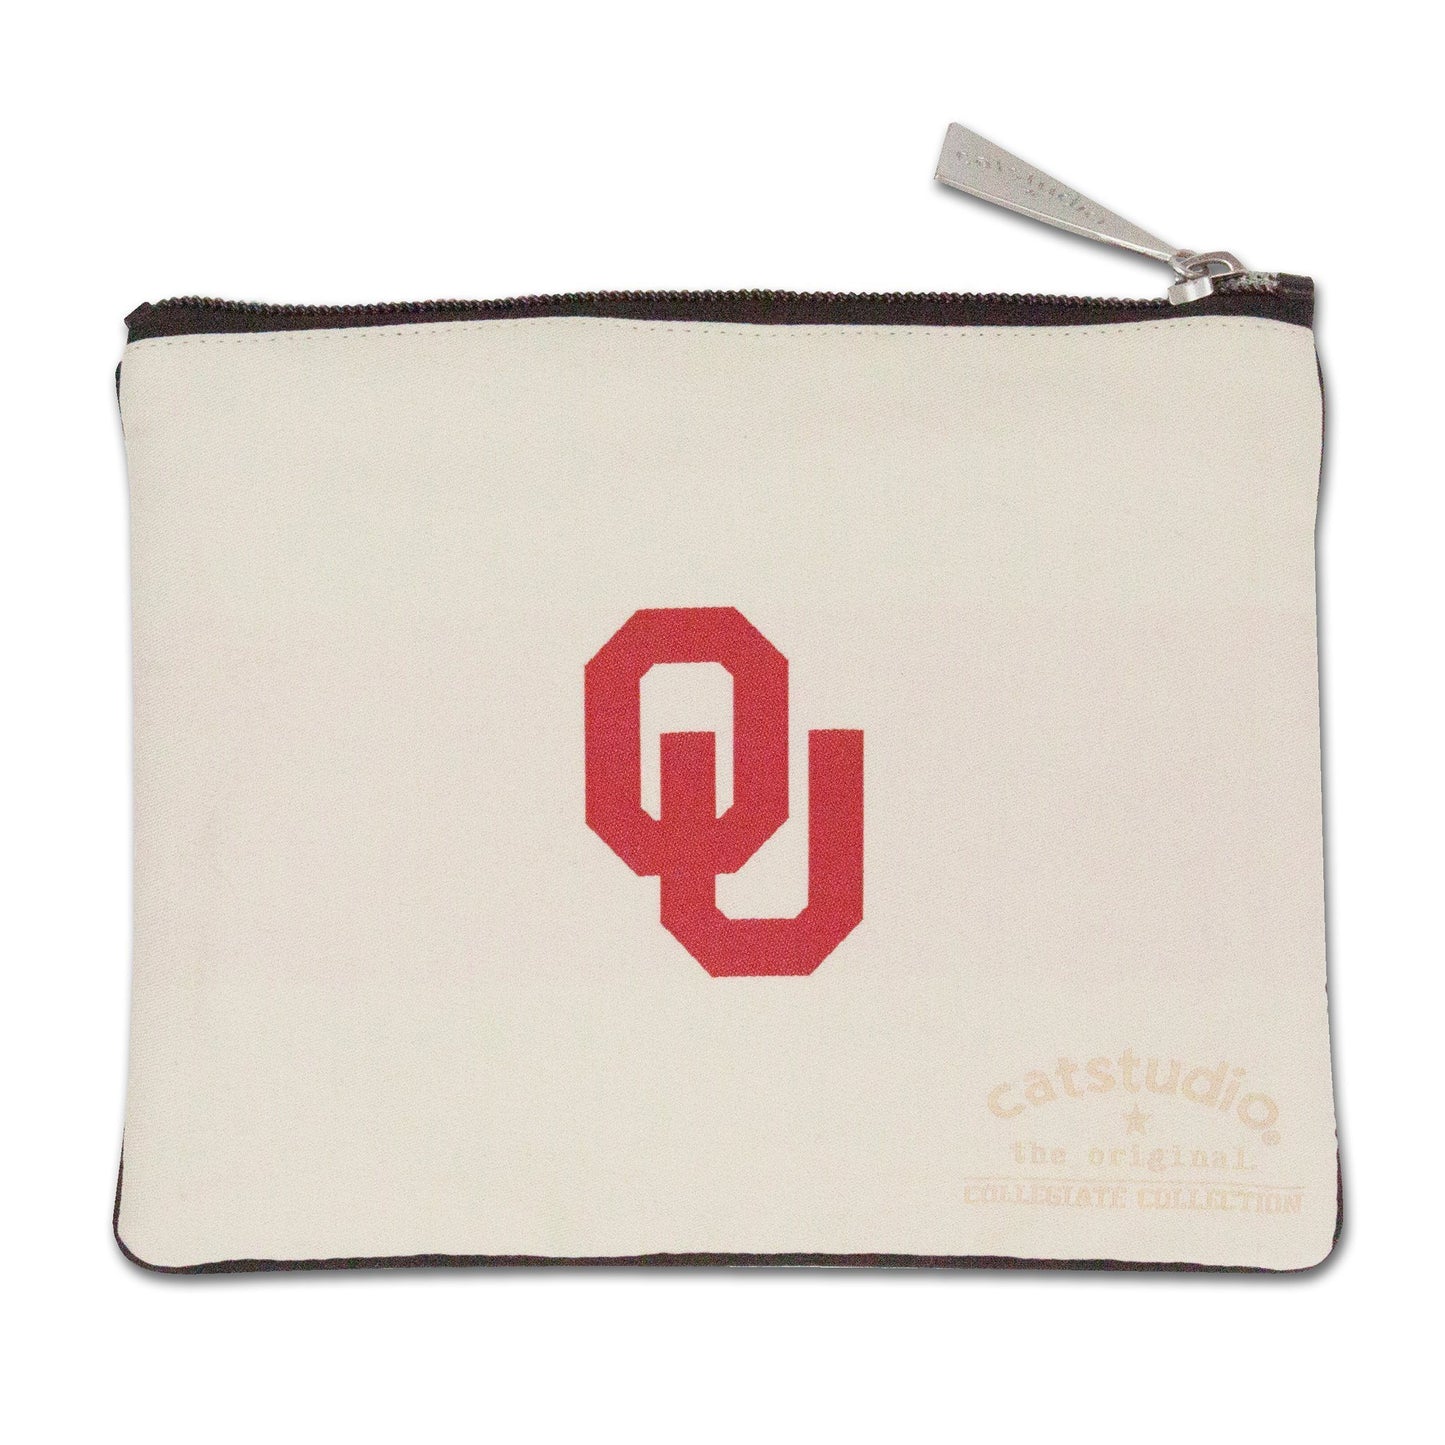 Oklahoma of University OU Sooners Zipper pouch back side school logo